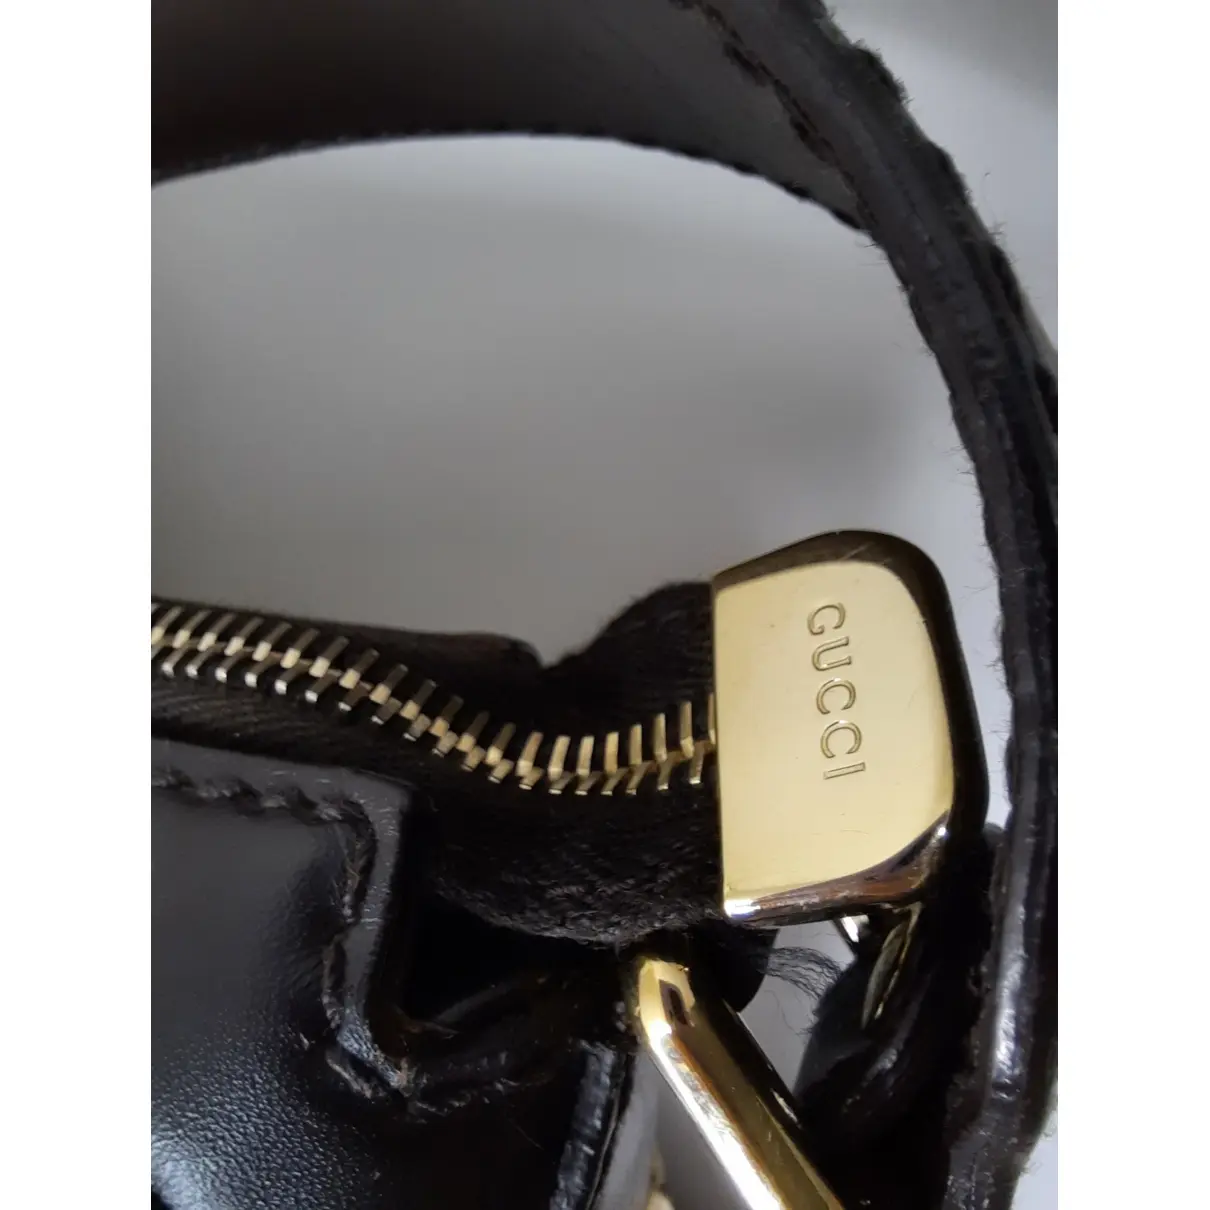 Sukey cloth handbag Gucci